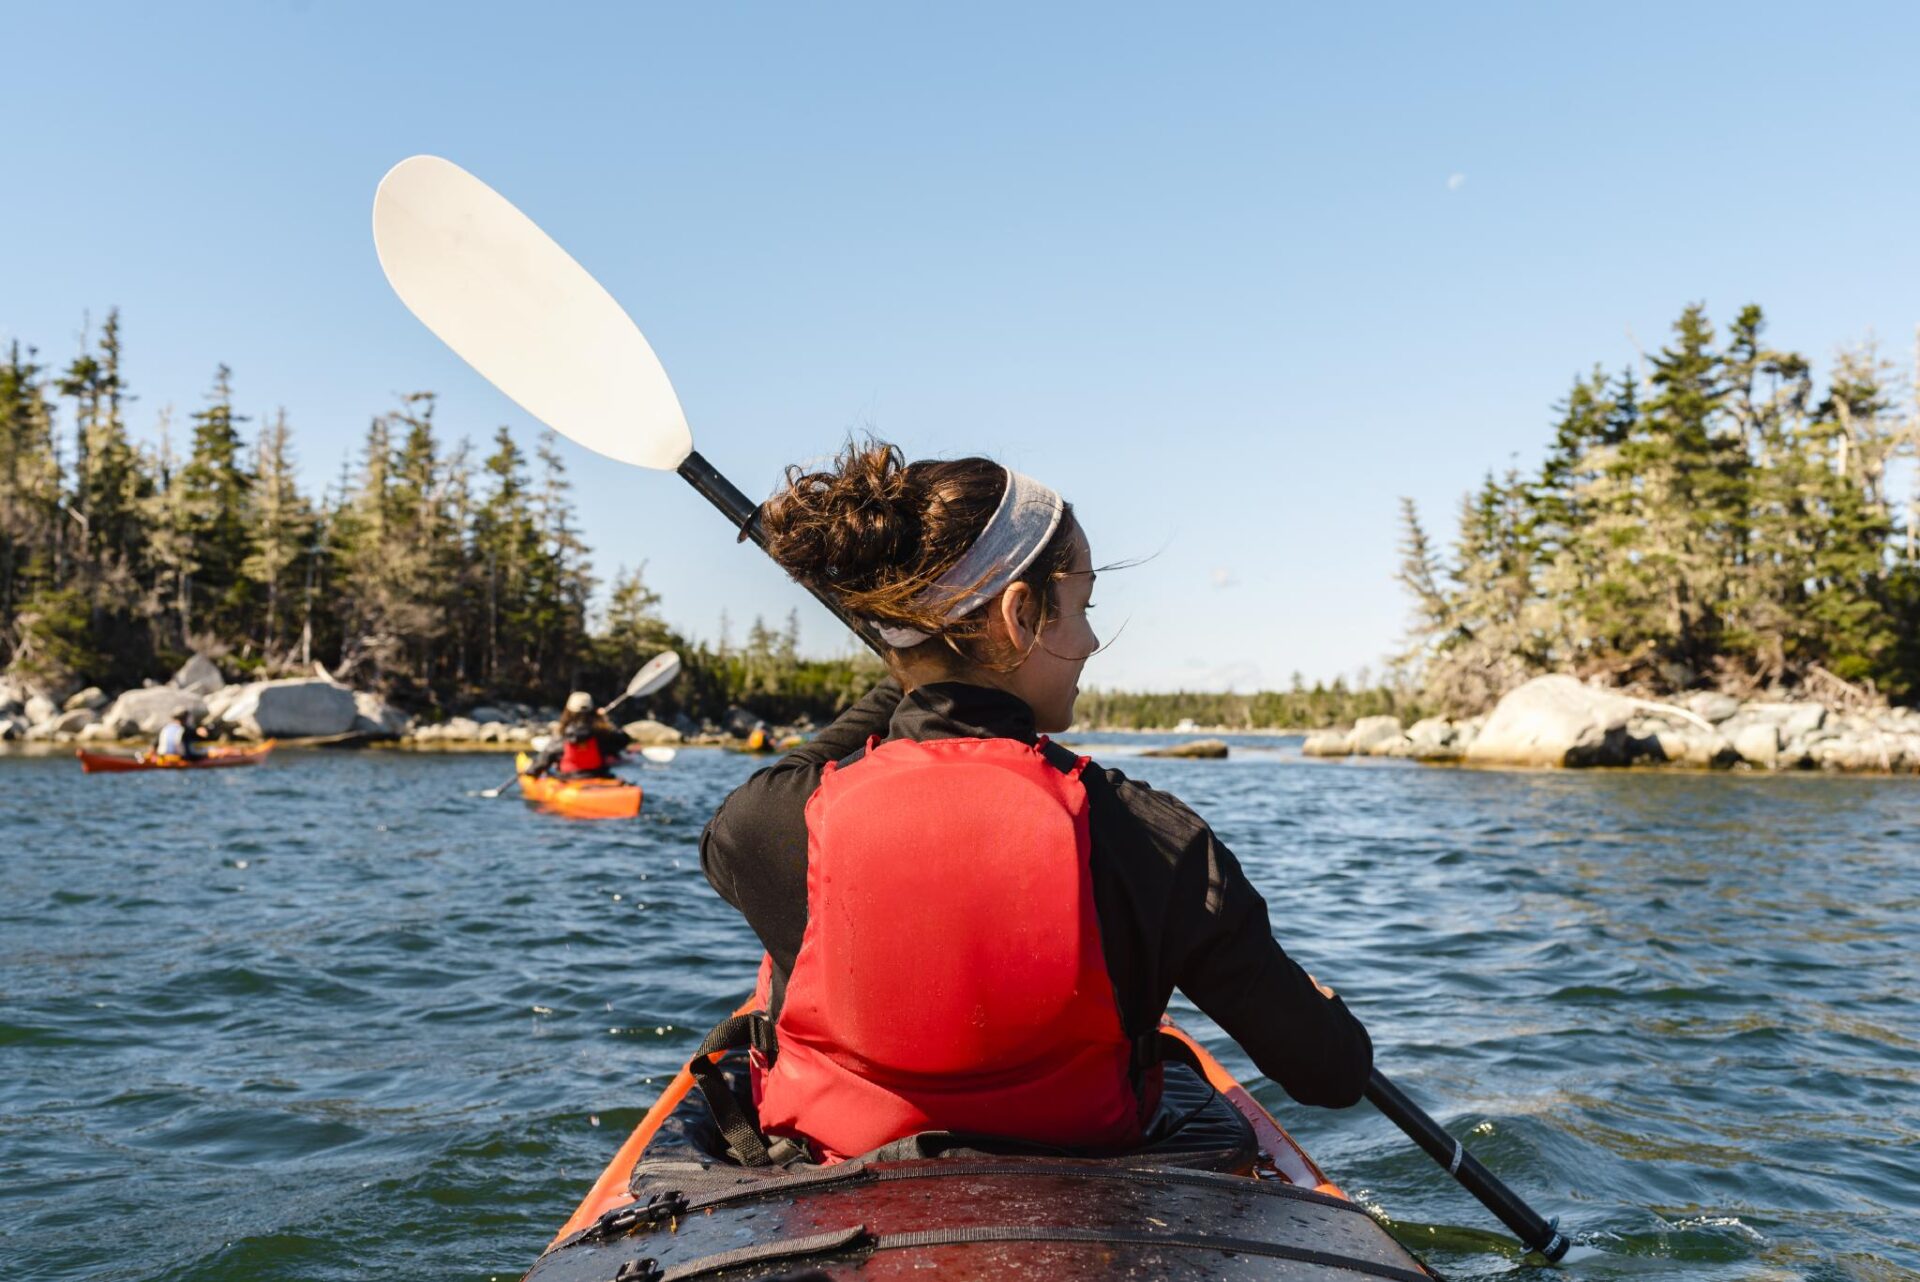 Norse Cove, Nova Scotia is a beautiful kayaking destination.